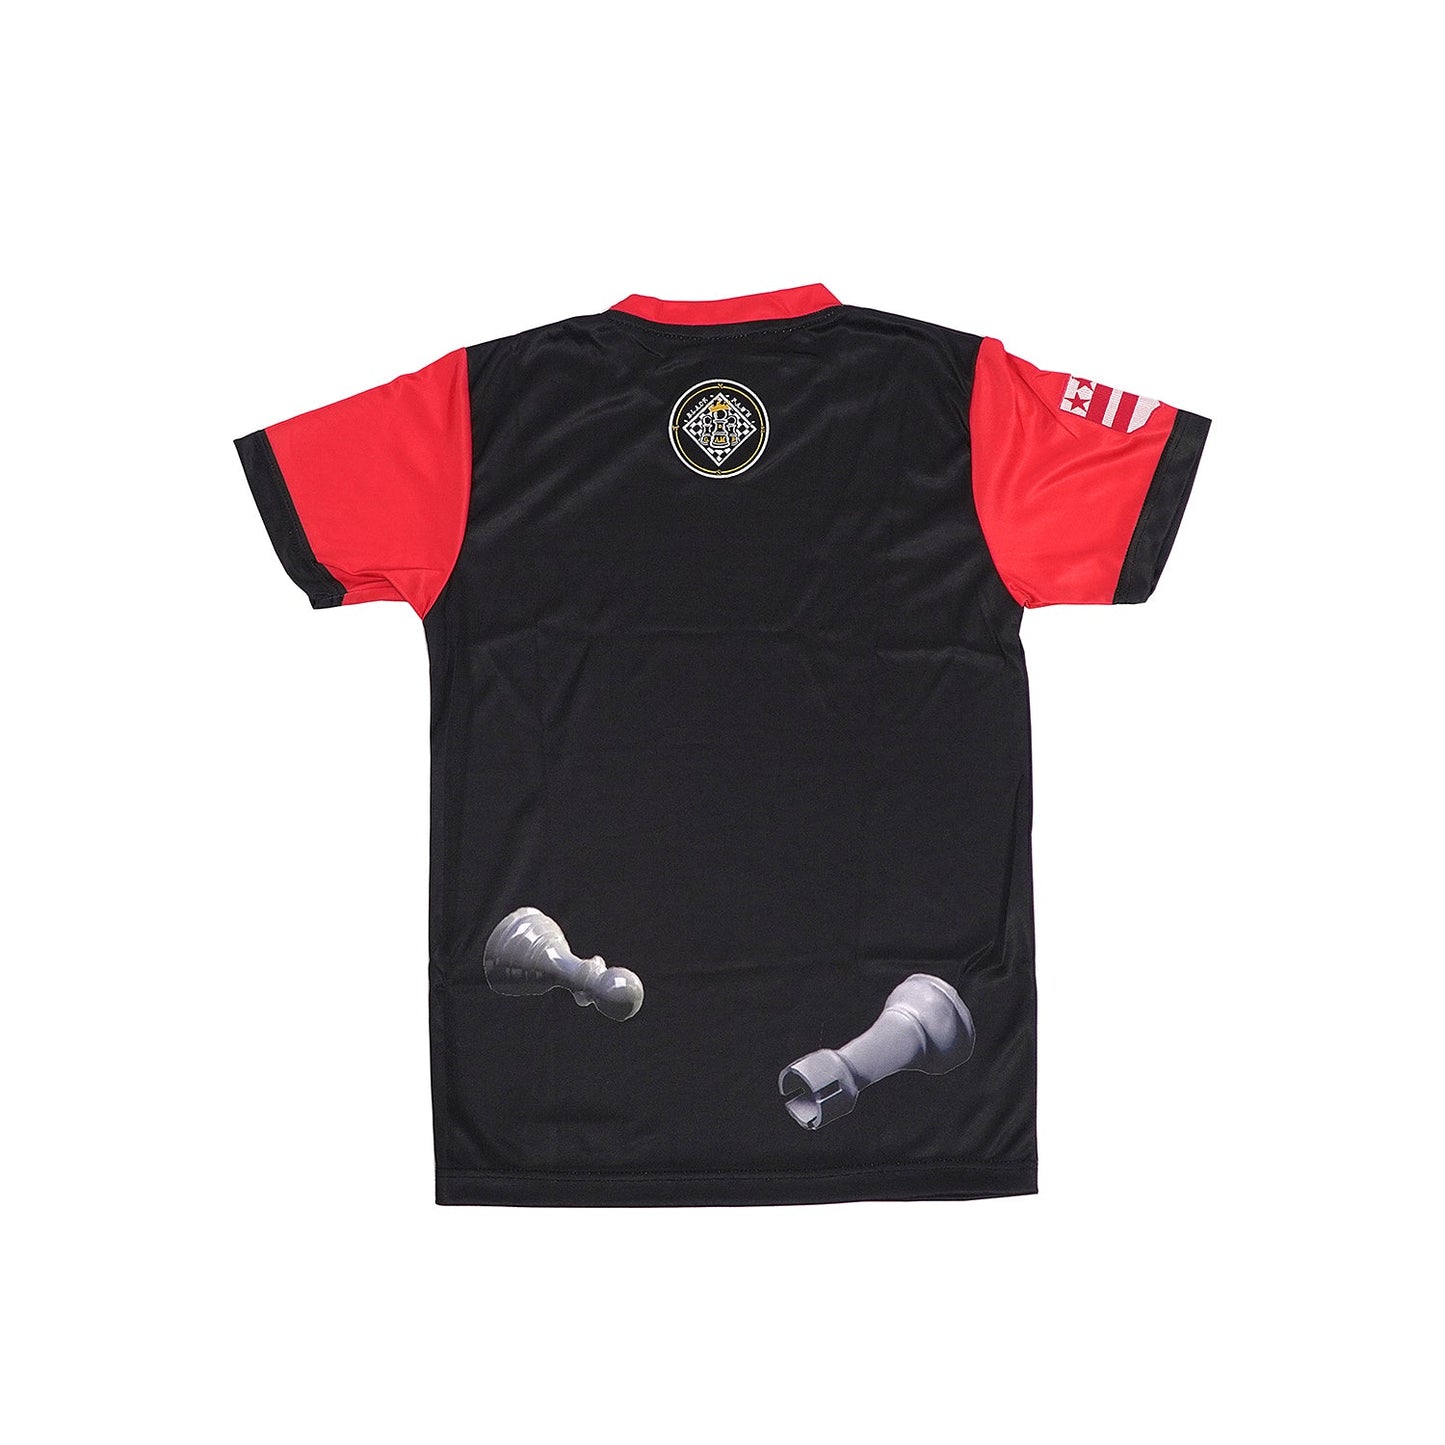 Black Pawn Game Black/Red Sublimation shirt (2XL)